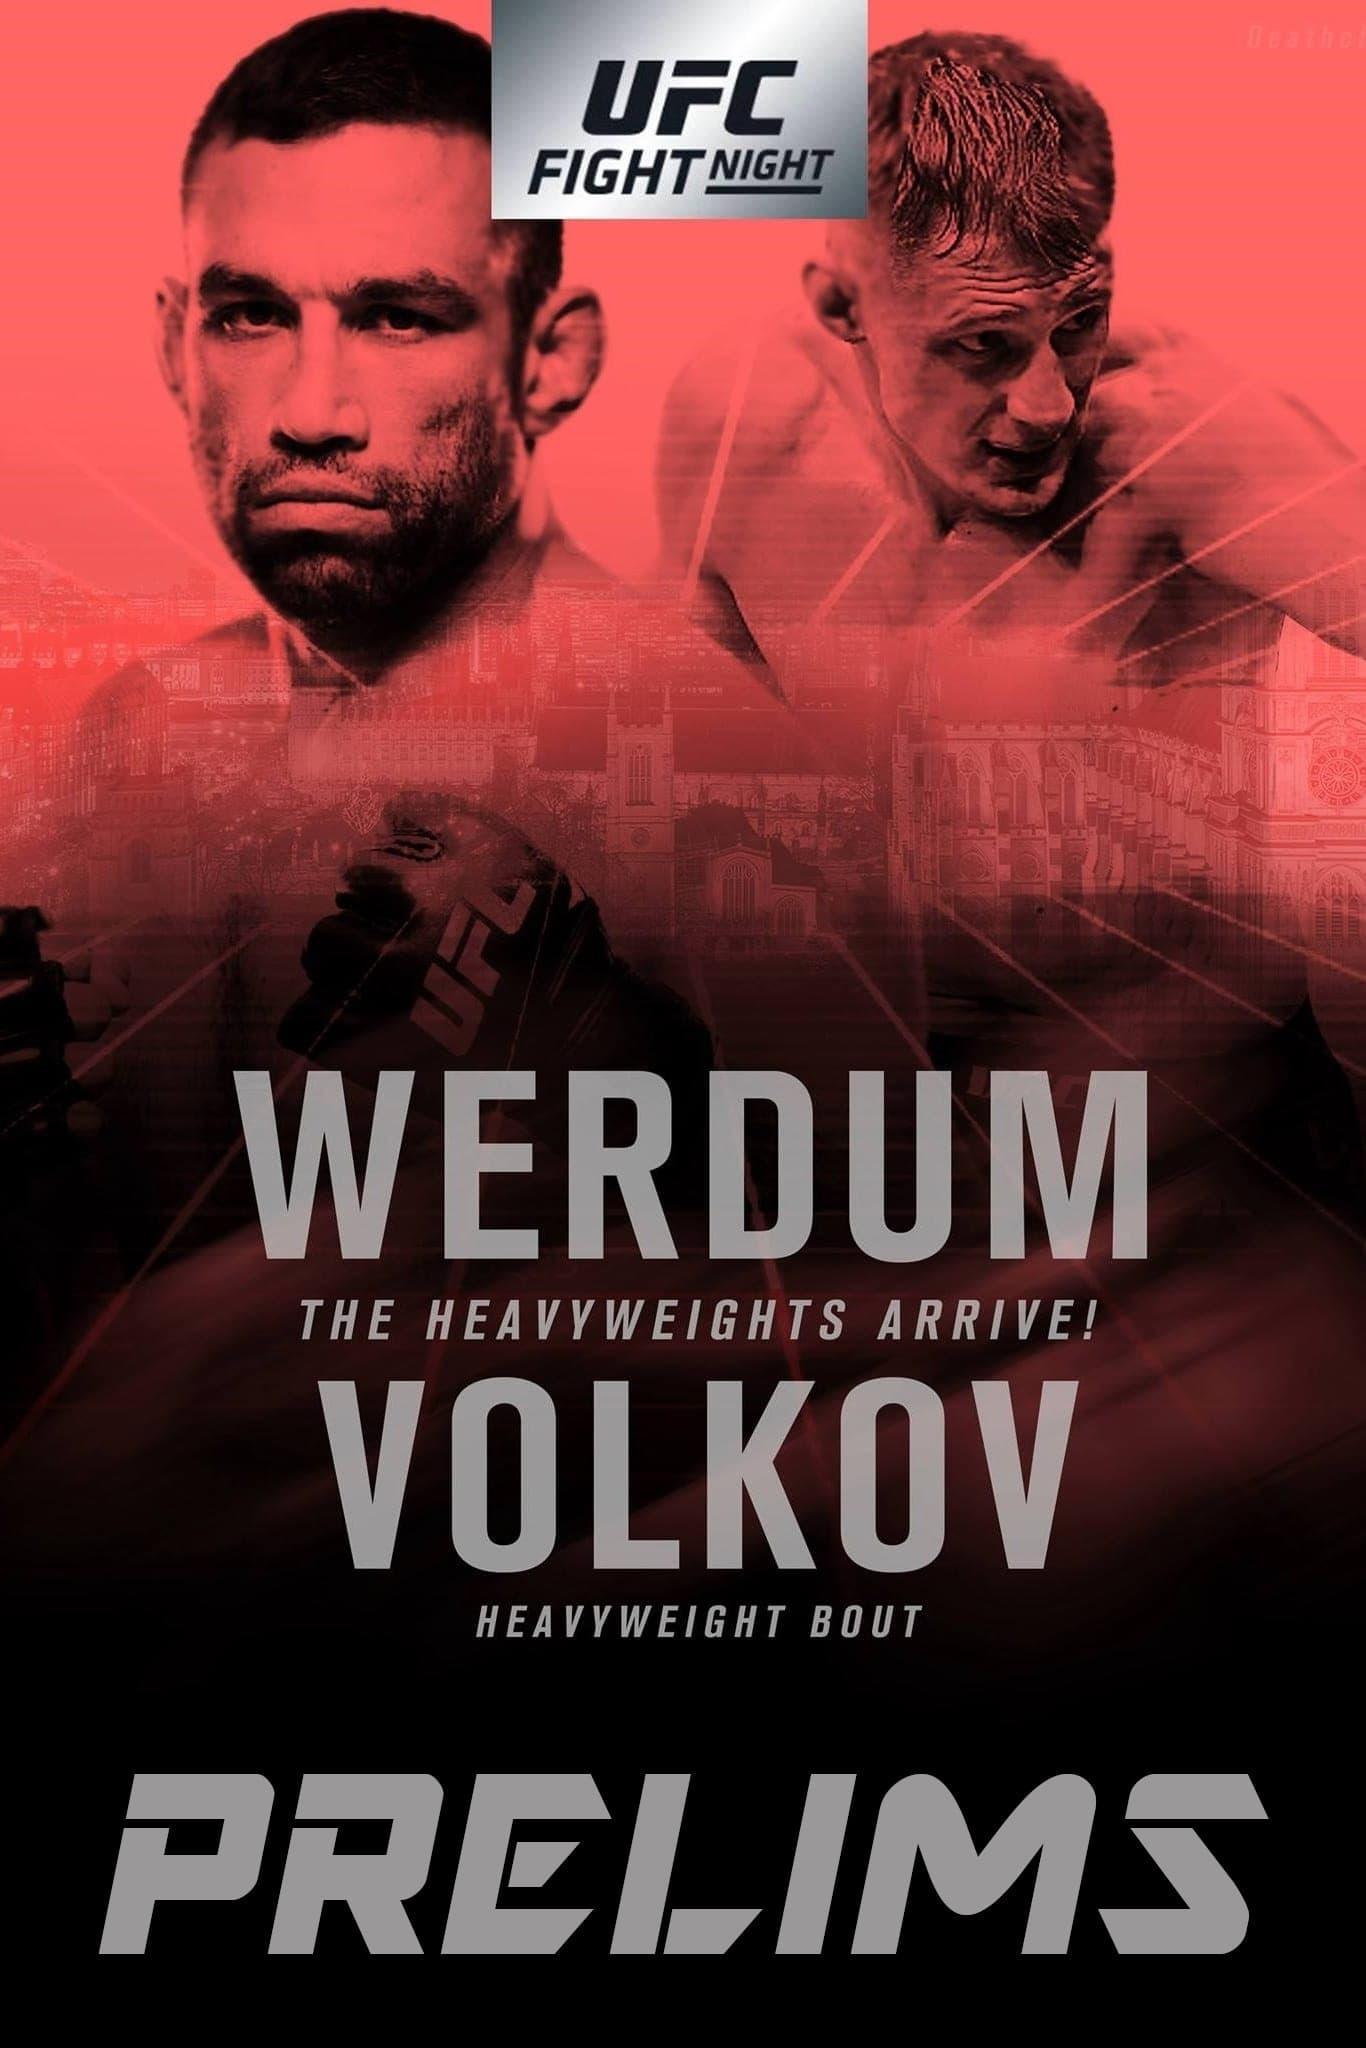 UFC Fight Night 127: Werdum vs. Volkov poster